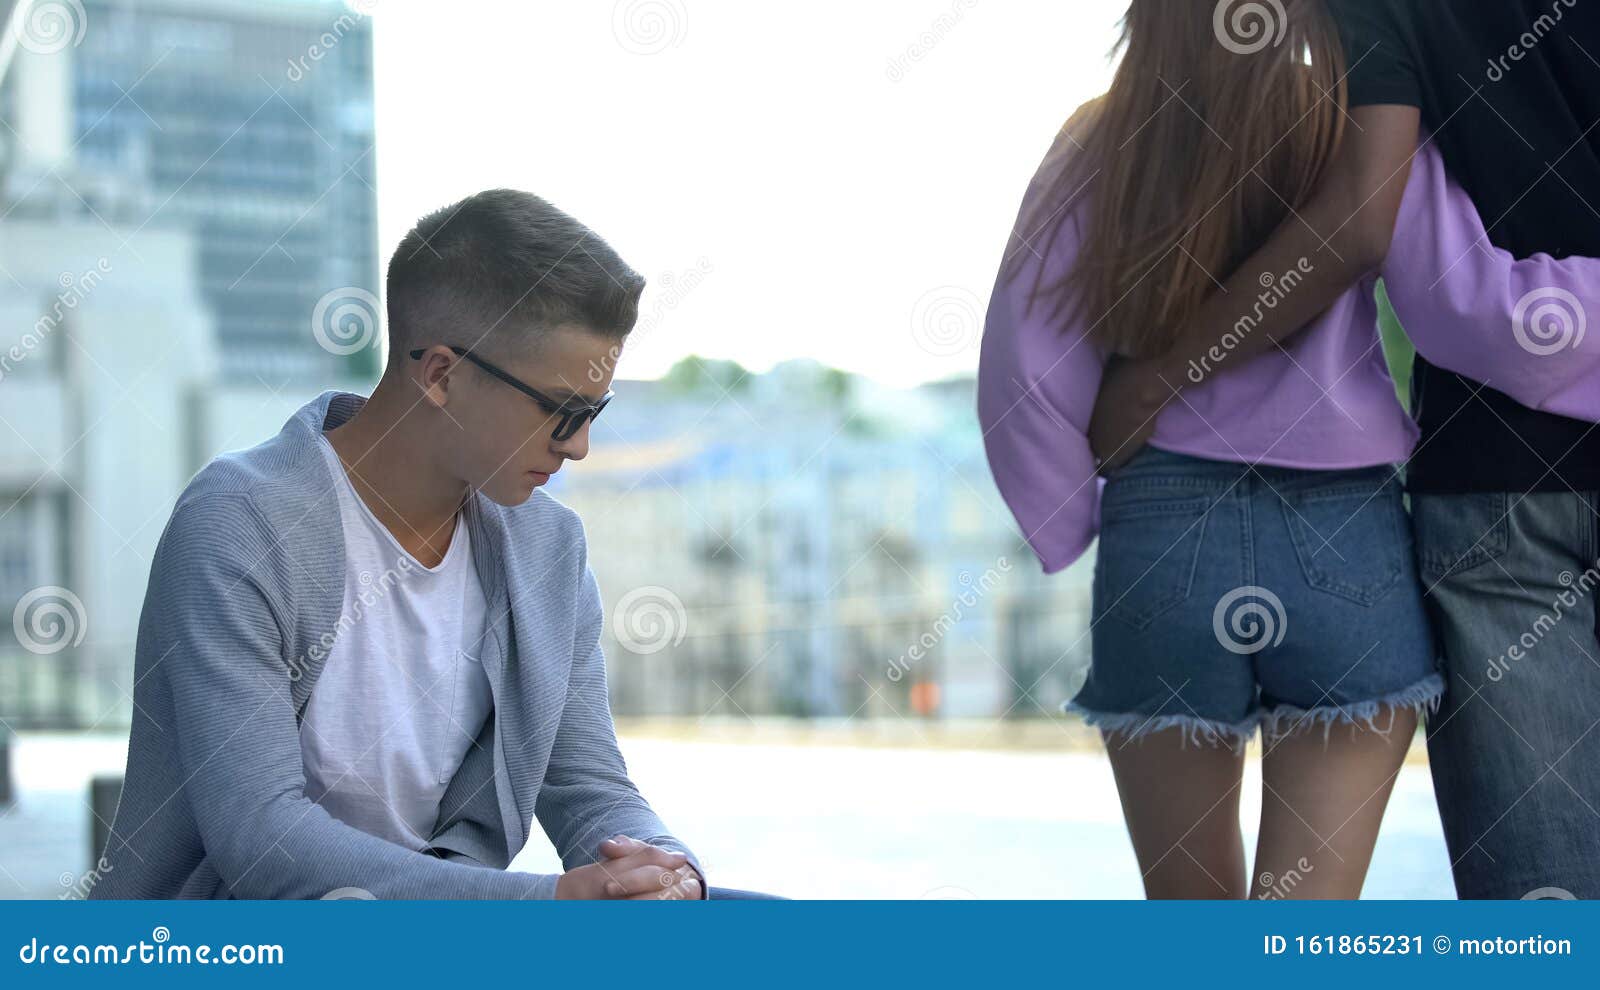 Ex Teen Girlfriend Pics walking outdoors